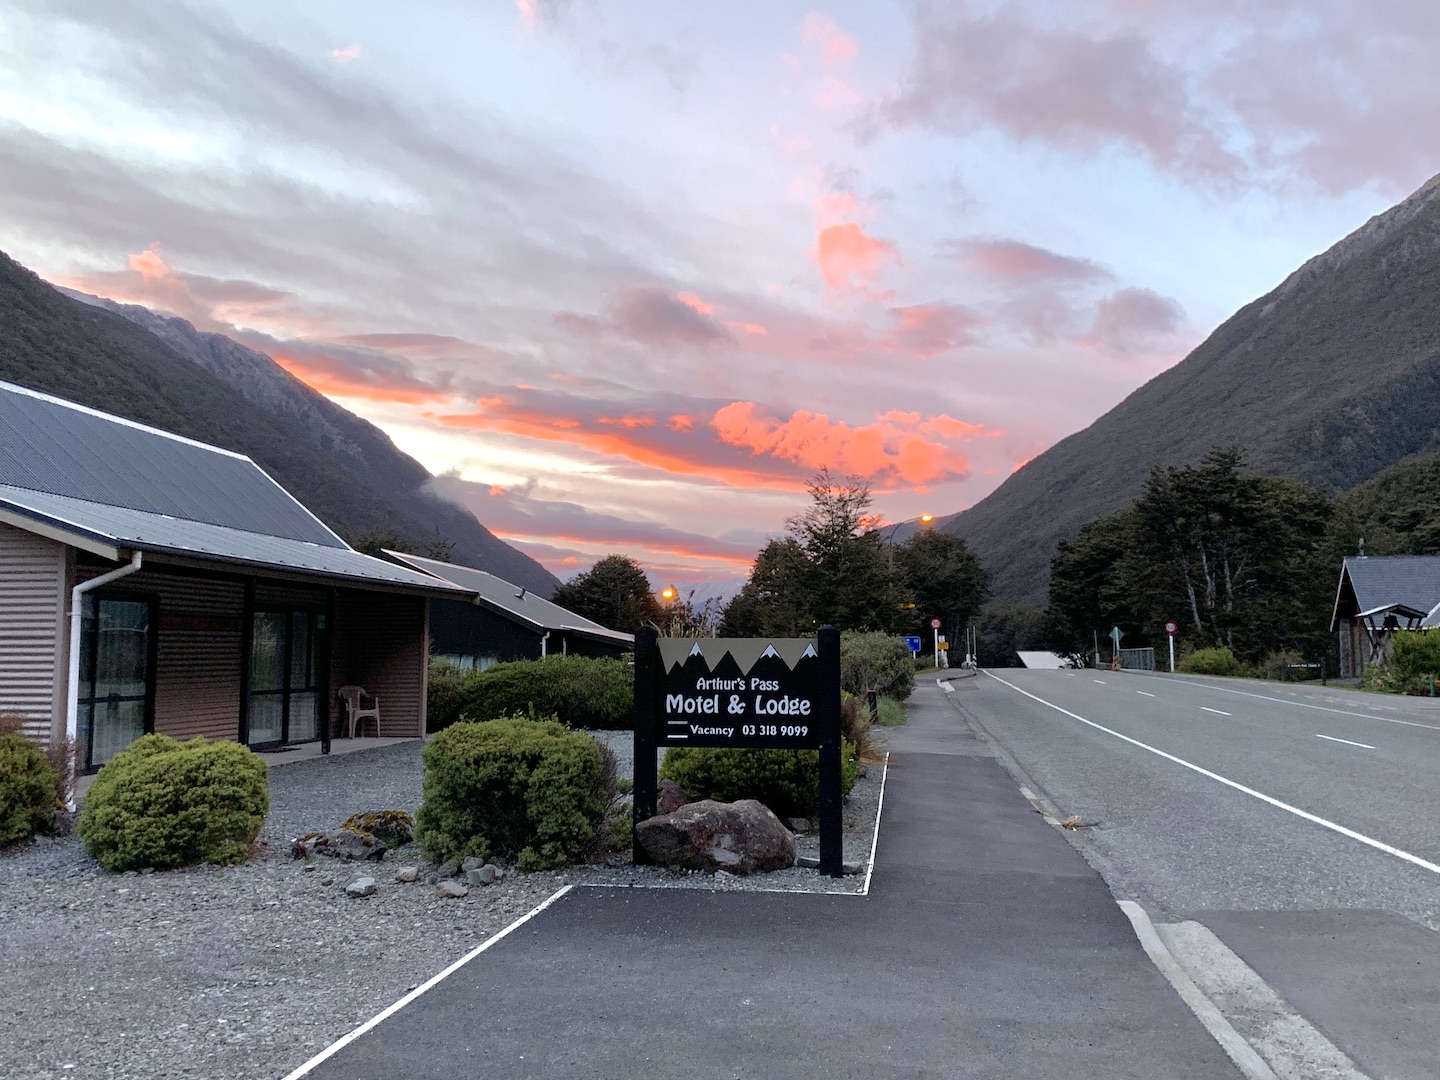 Arthur's Pass Motel & Lodge - Arthur's Pass National Park, New Zealand